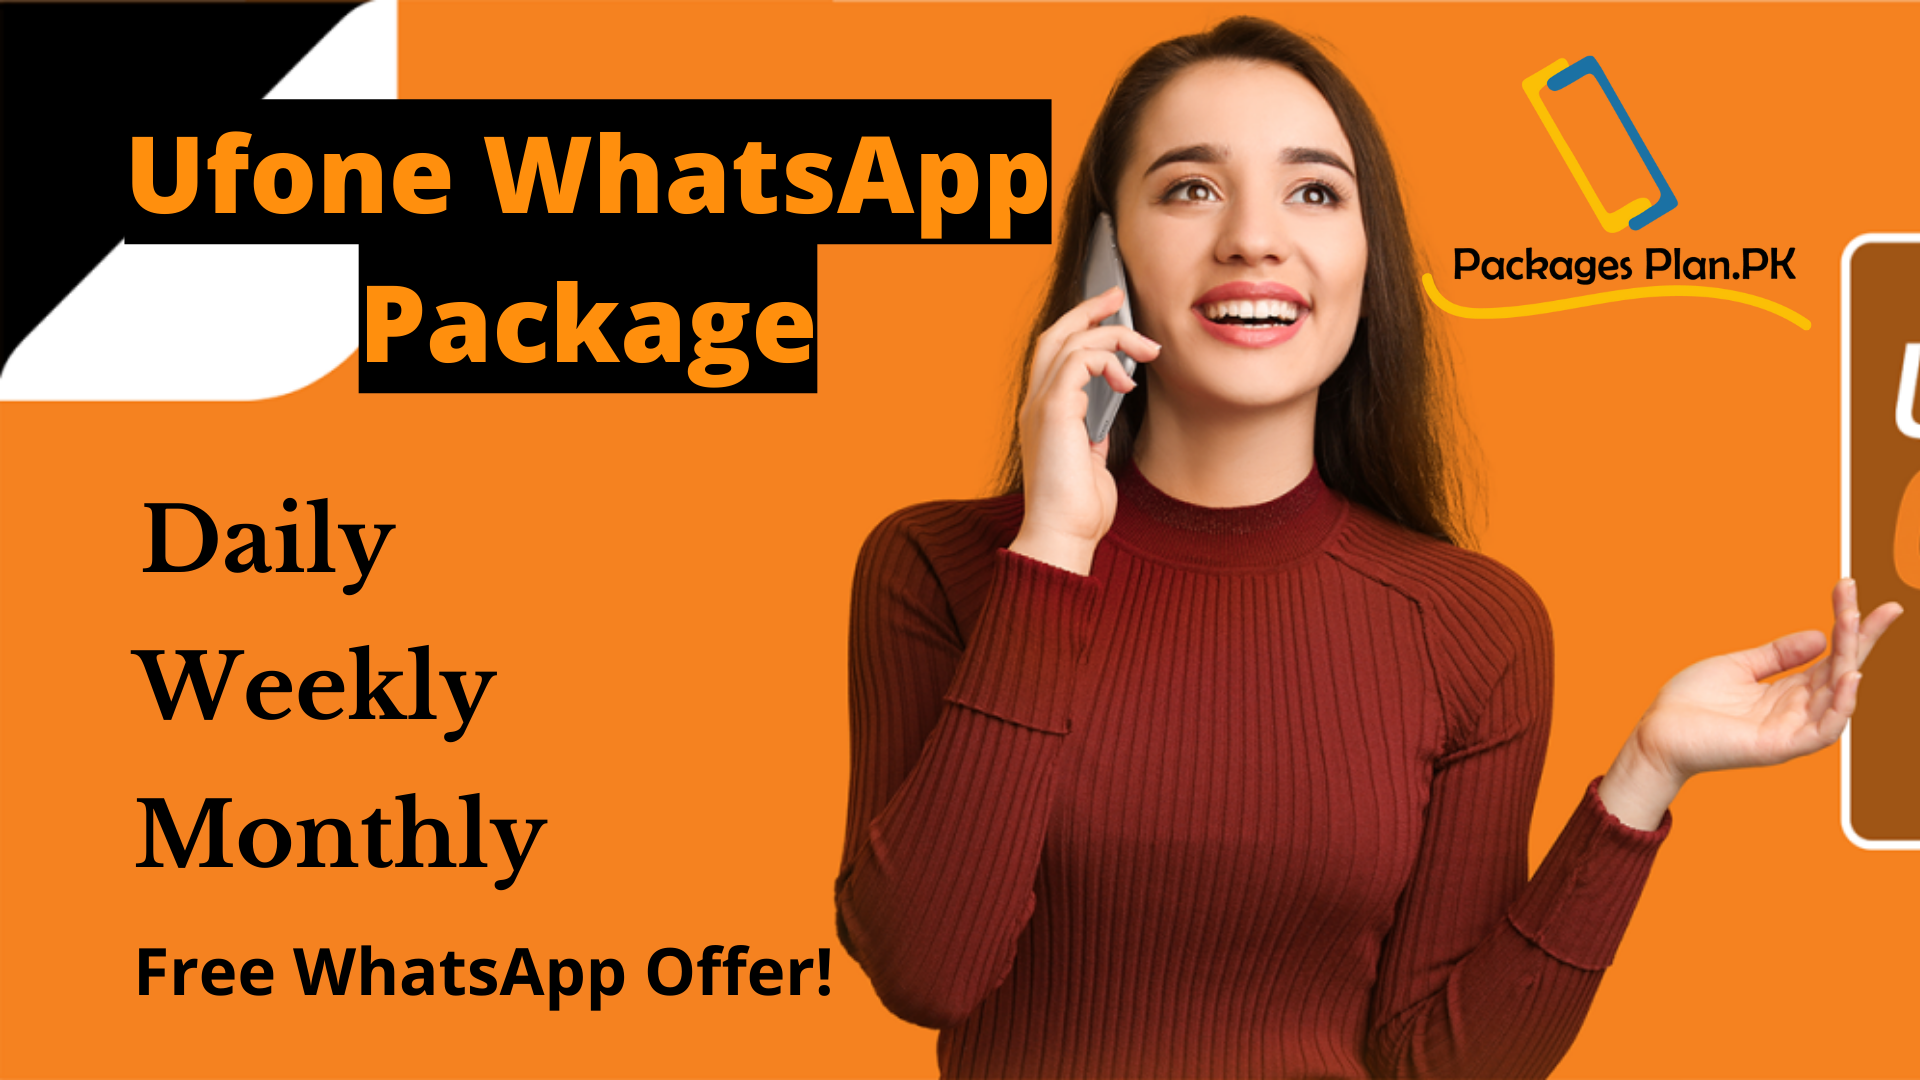 ufone whatsapp package